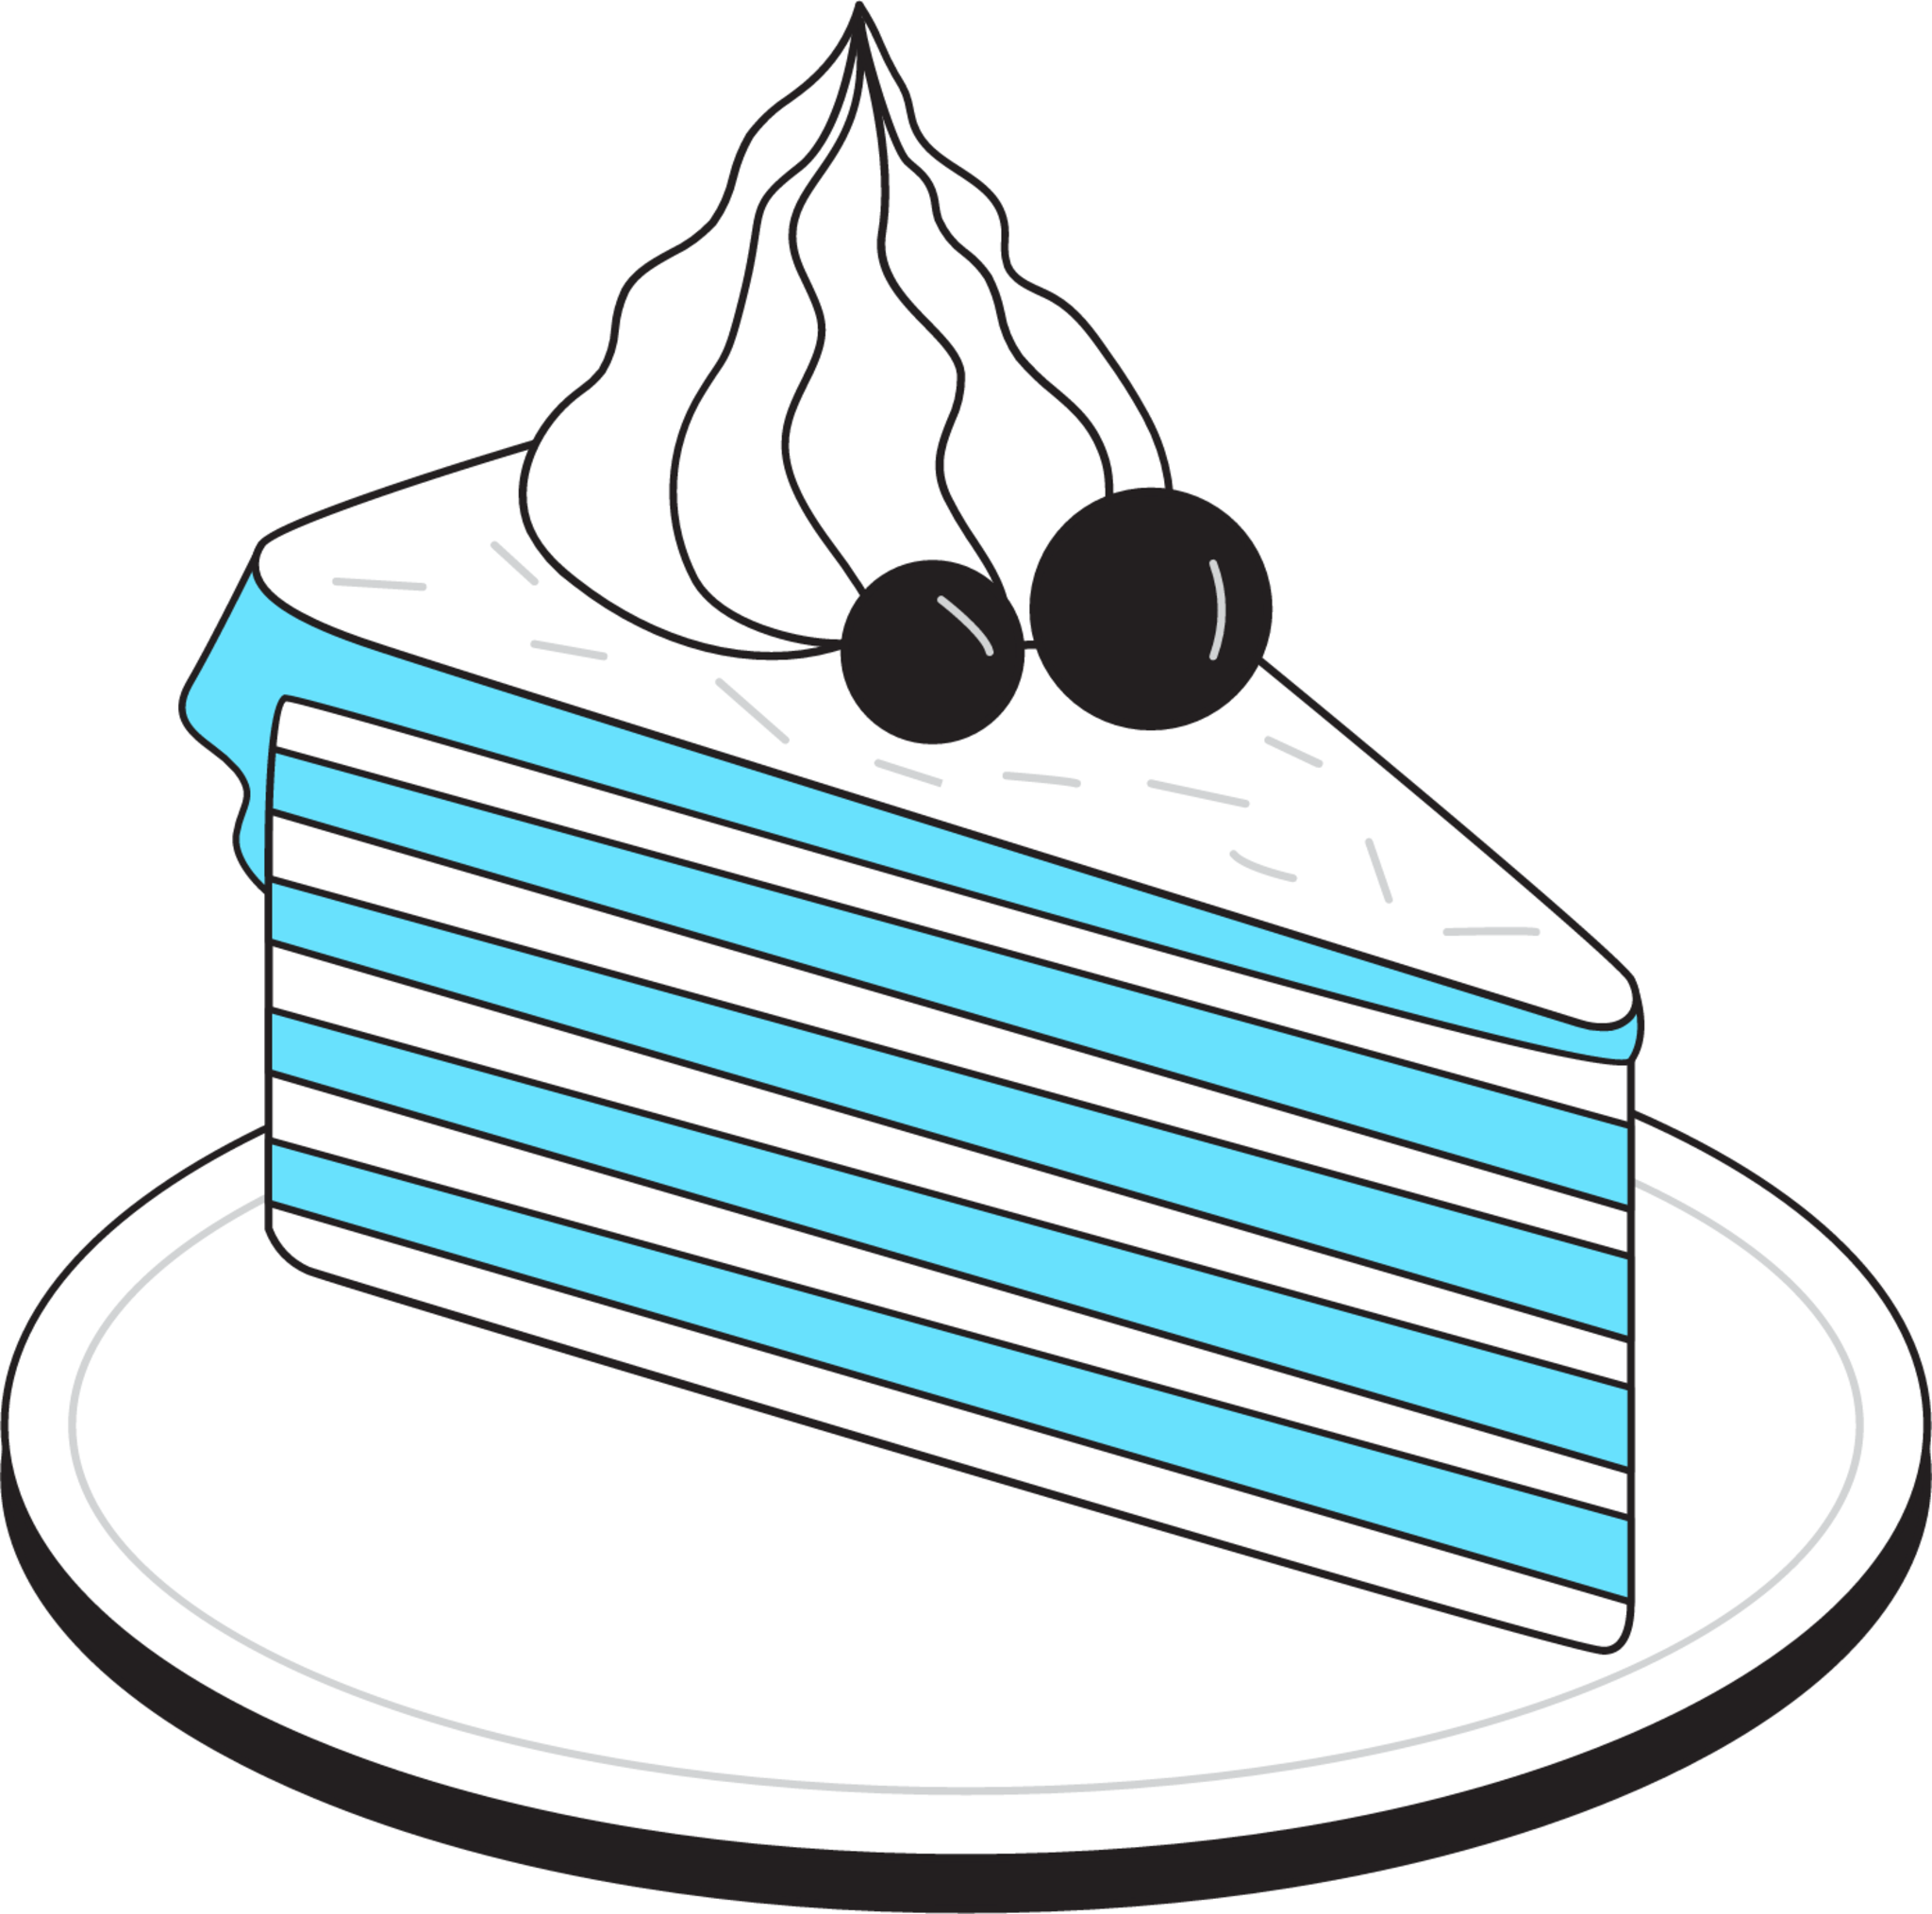 Cake illustration